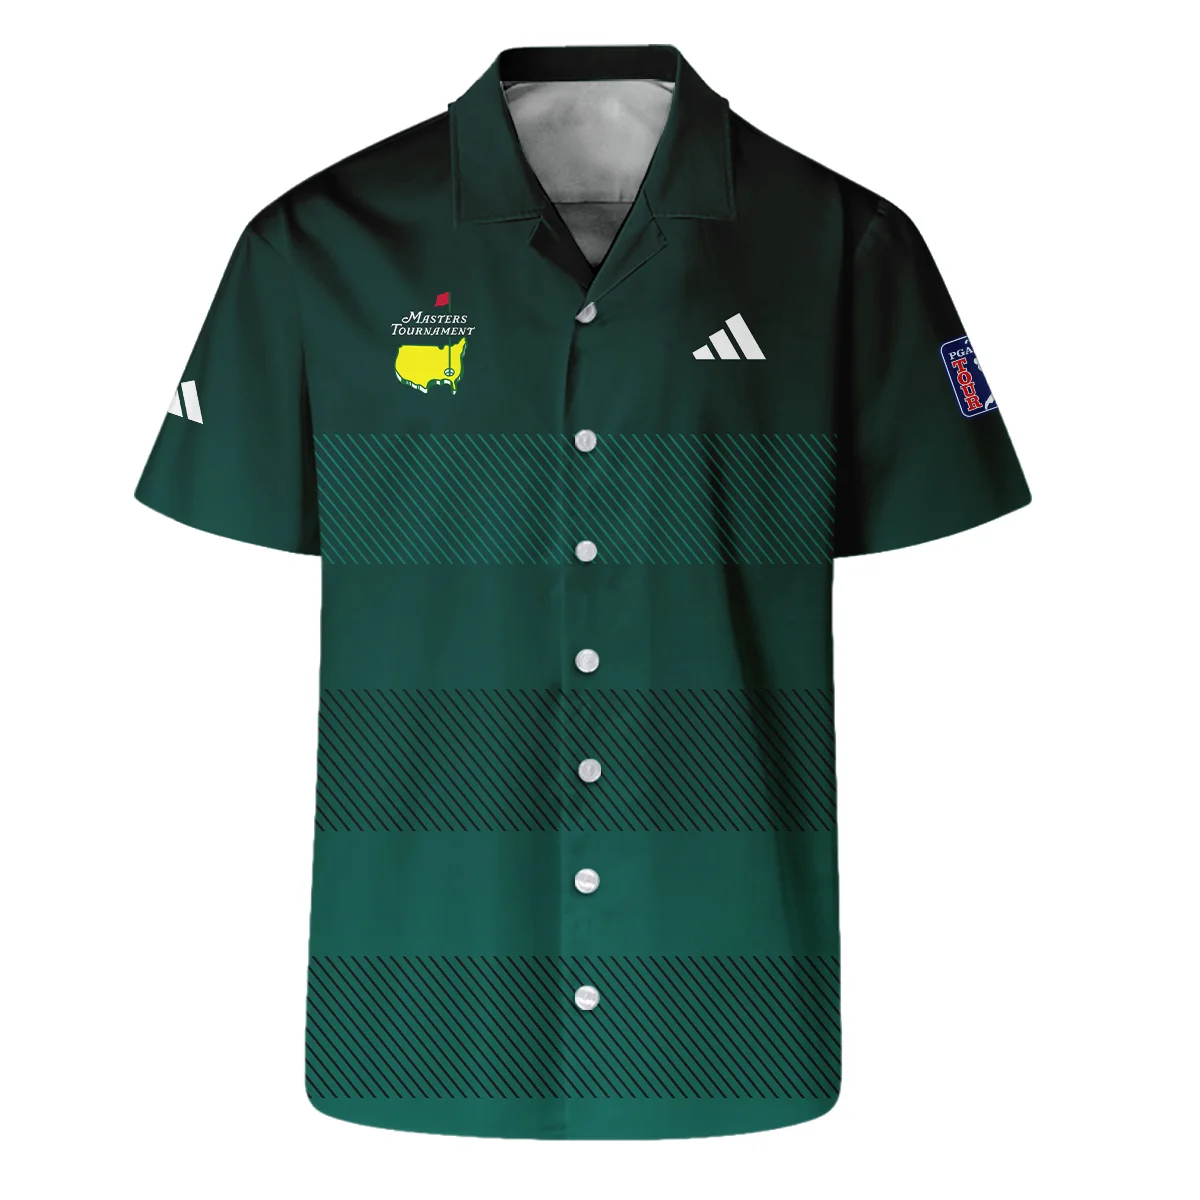 Adidas Masters Tournament Dark Green Gradient Stripes Pattern Golf Sport Hoodie Shirt Style Classic Hoodie Shirt